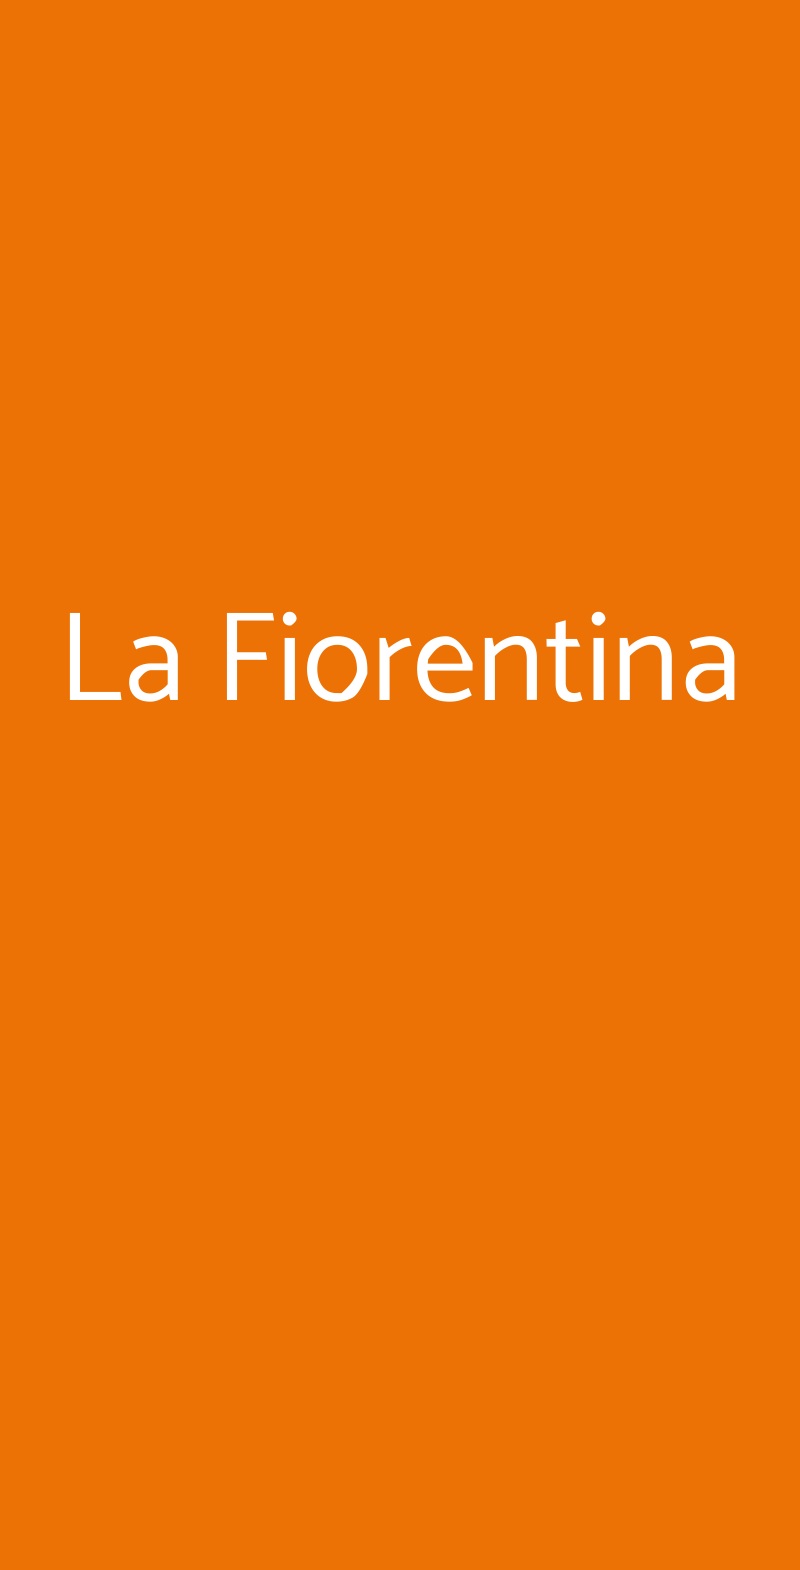 La Fiorentina San Donà di Piave menù 1 pagina